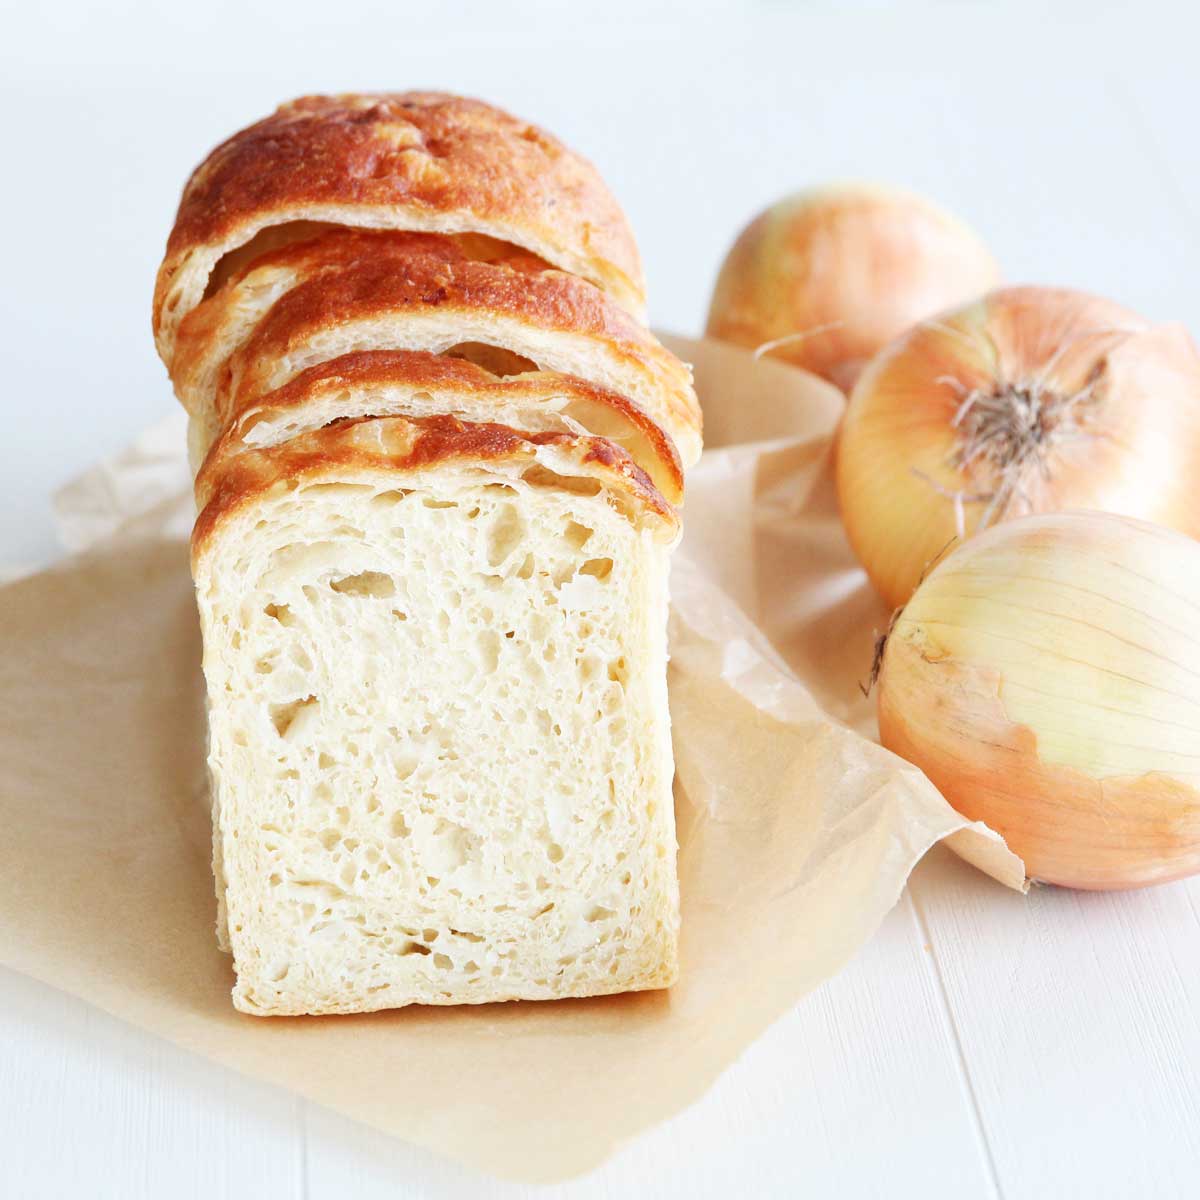 Strawberry & Cream Stuffed French Bread (Easy Appetizer & Party Snack) - stuffed french bread